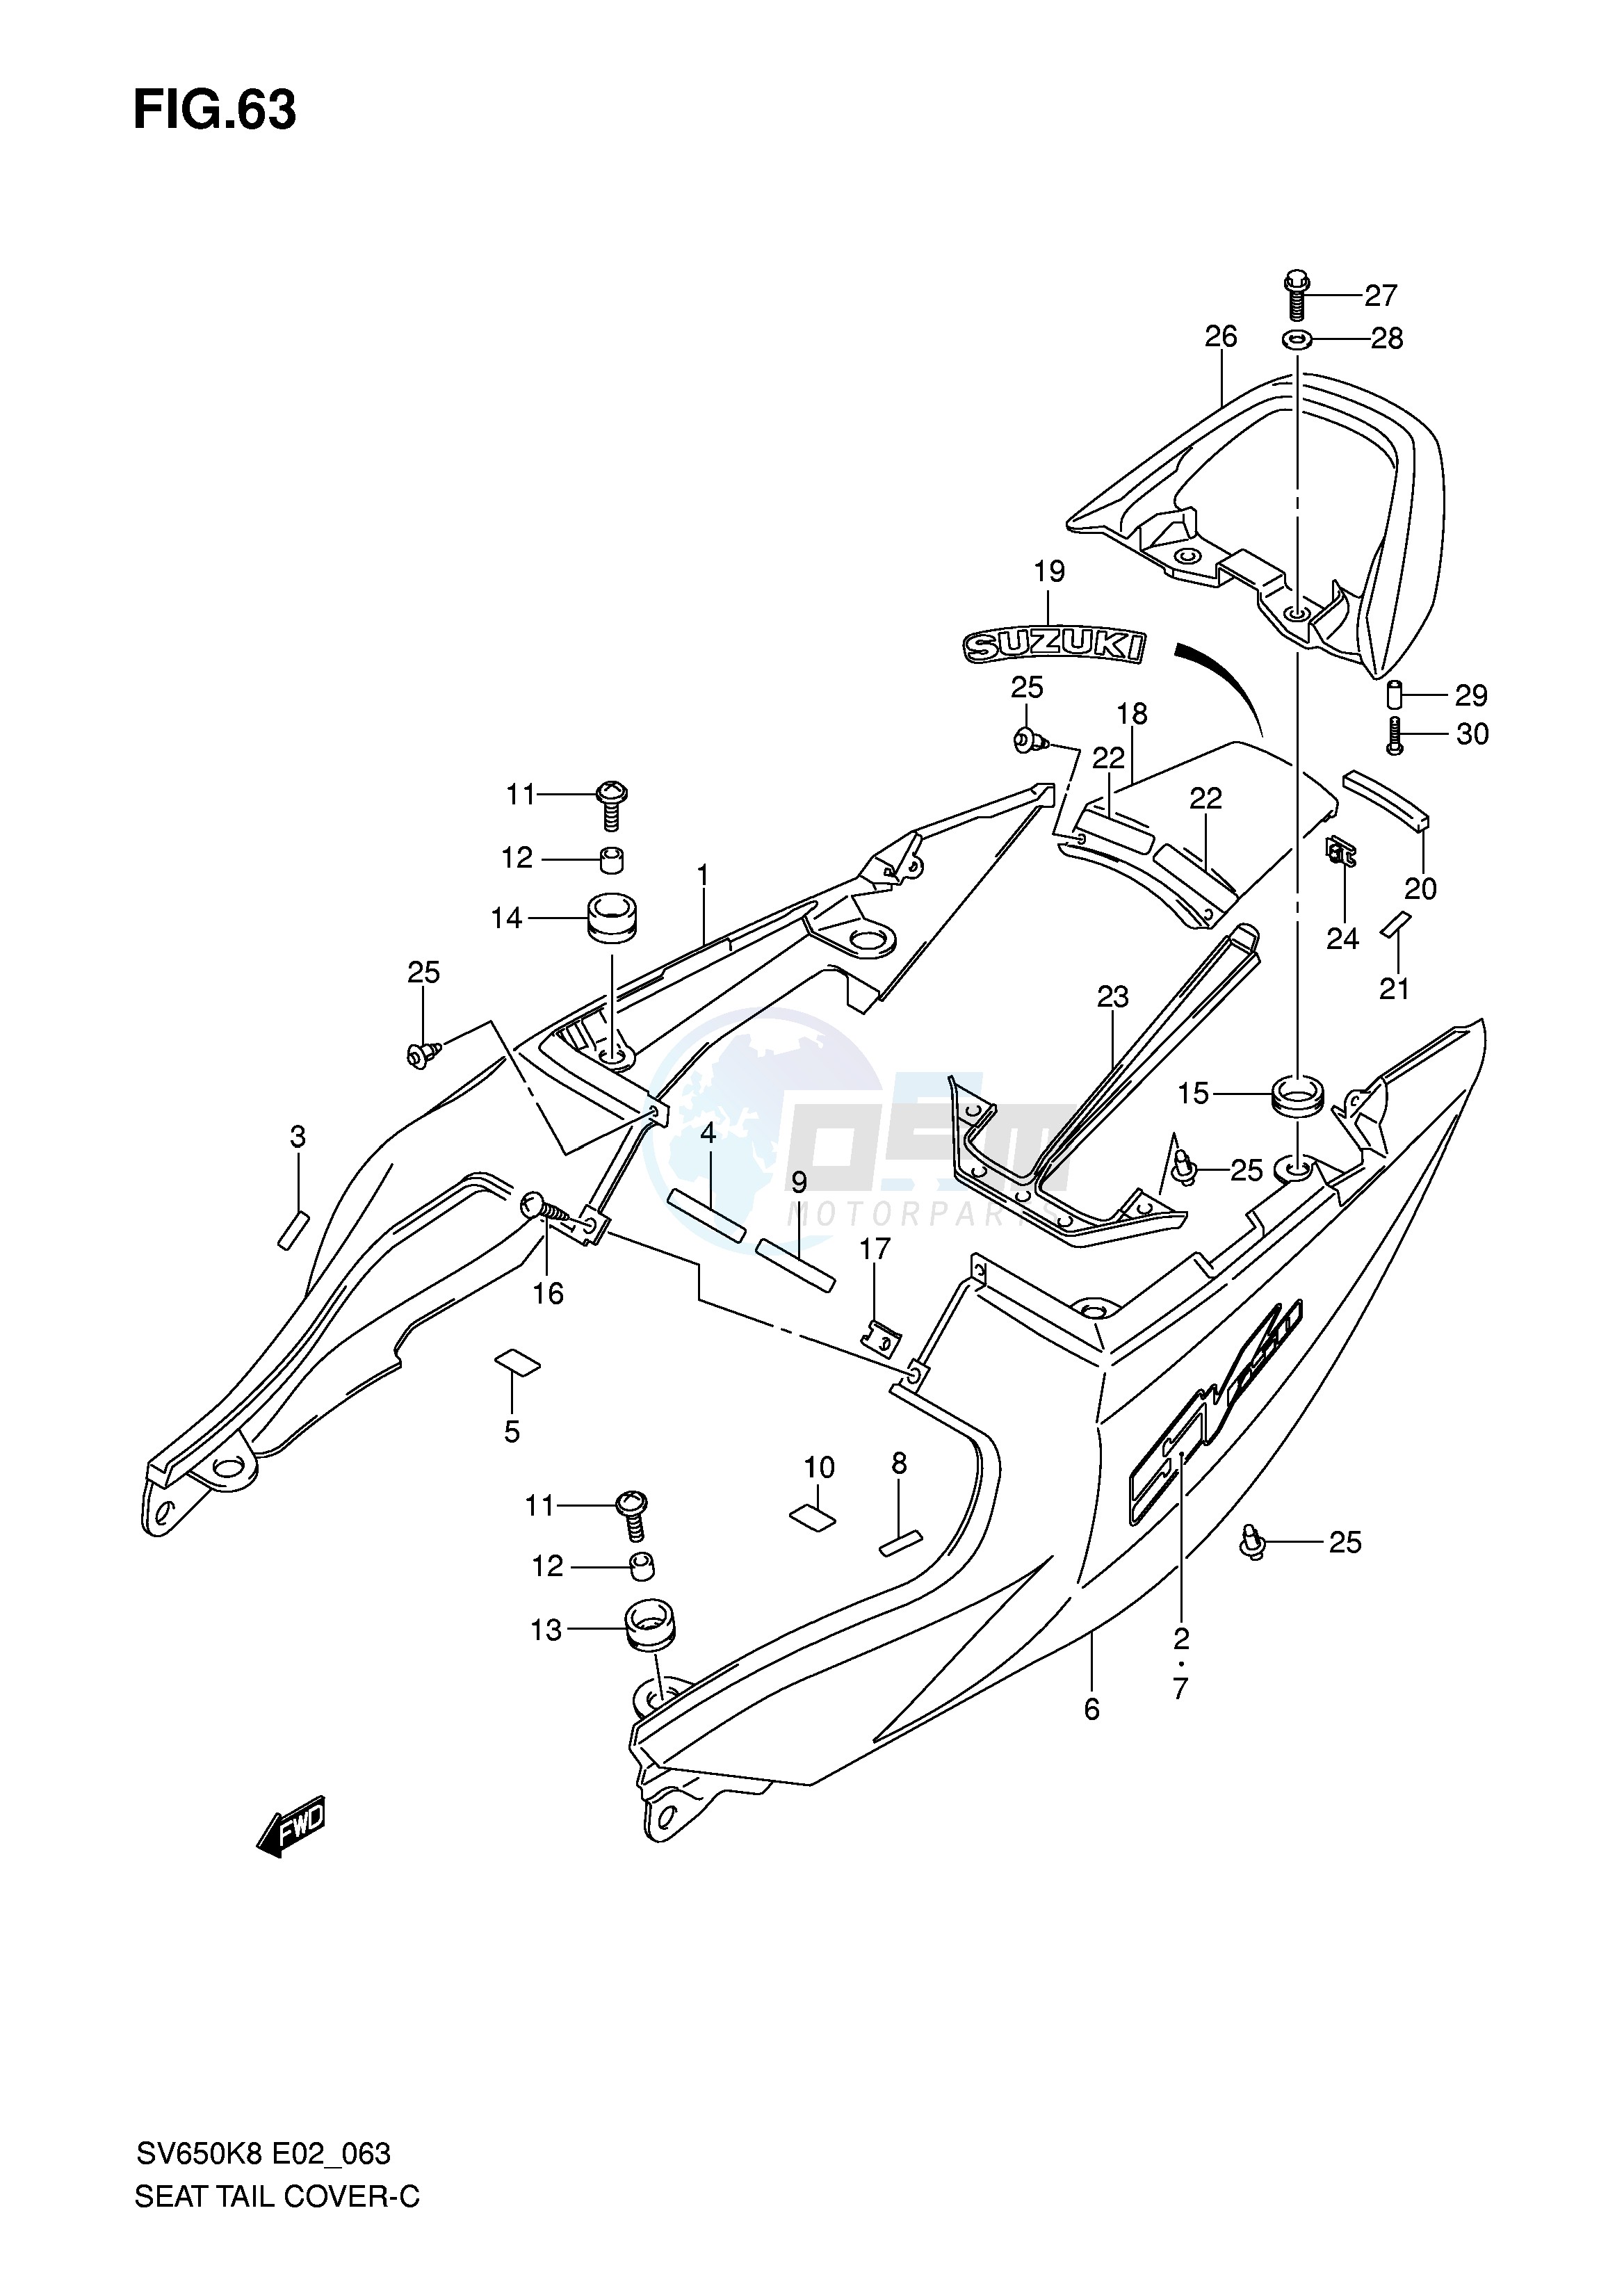 SEAT TAIL COVER (SV650K8 UK8 AK8 UAK8) blueprint